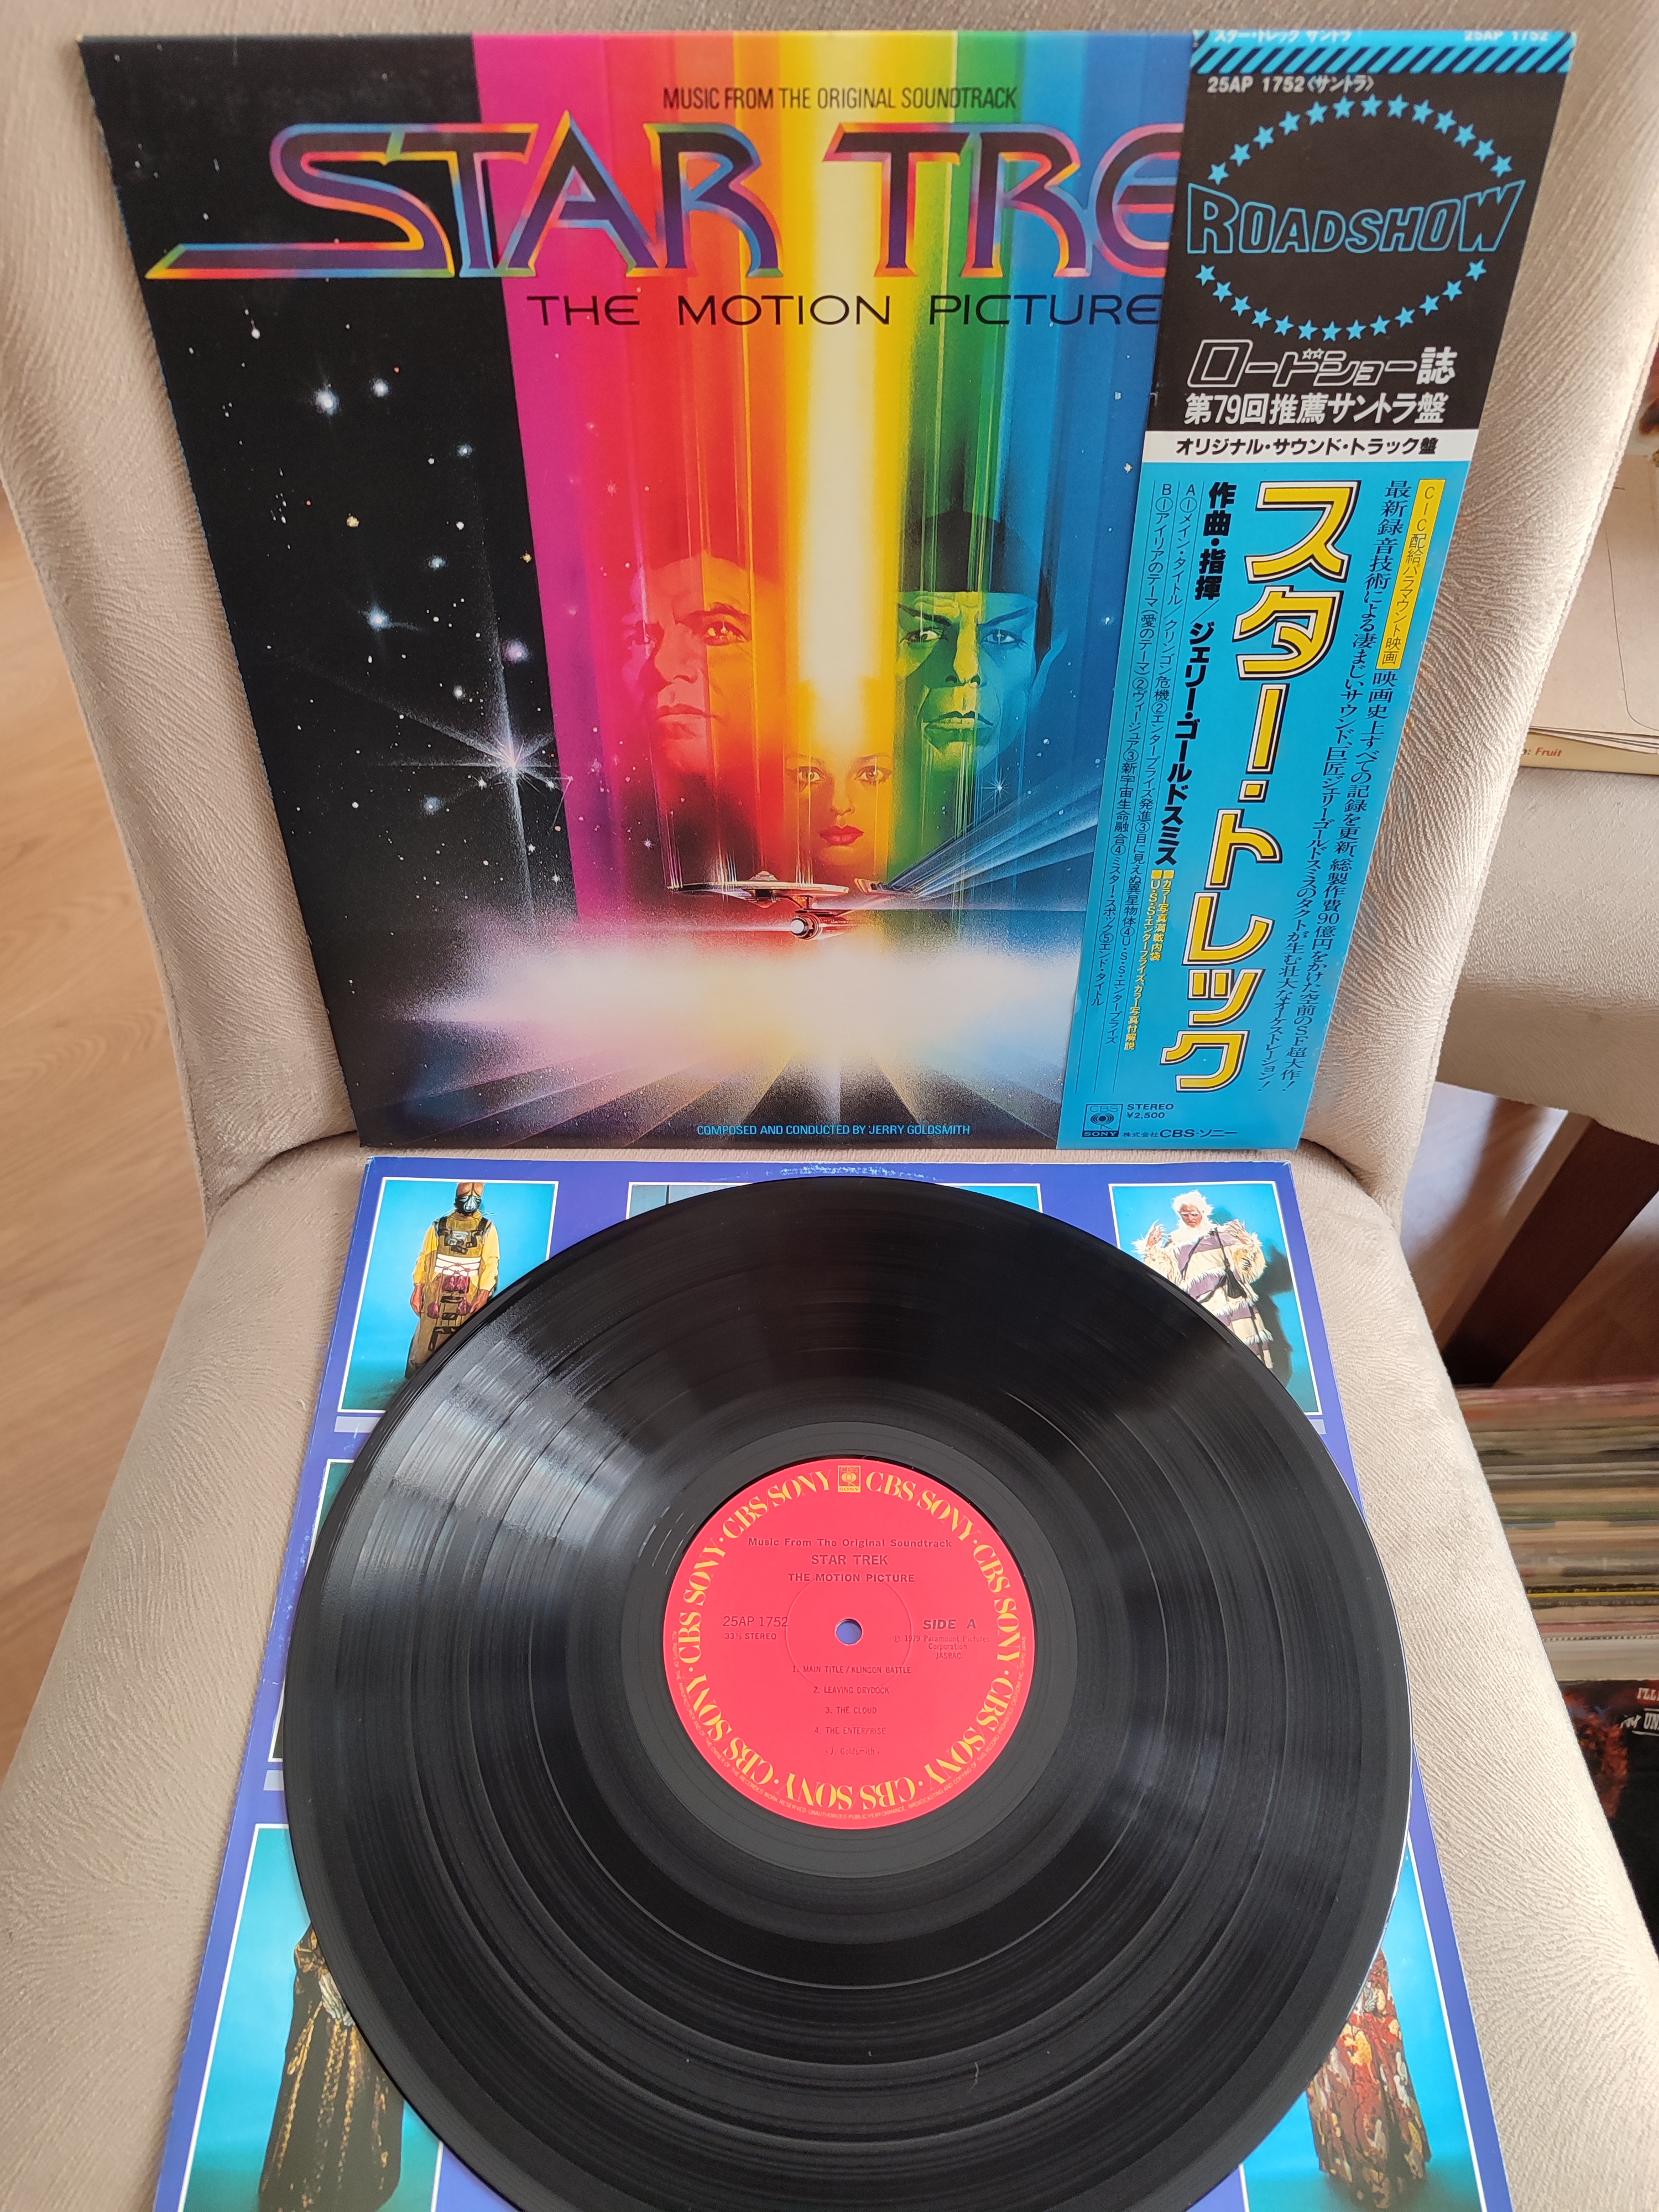 STAR TREK / UZAY YOLU - Soundtrack - 1979 Japonya Basım - 33lük LP Plak - Obi’li Temiz 2.el